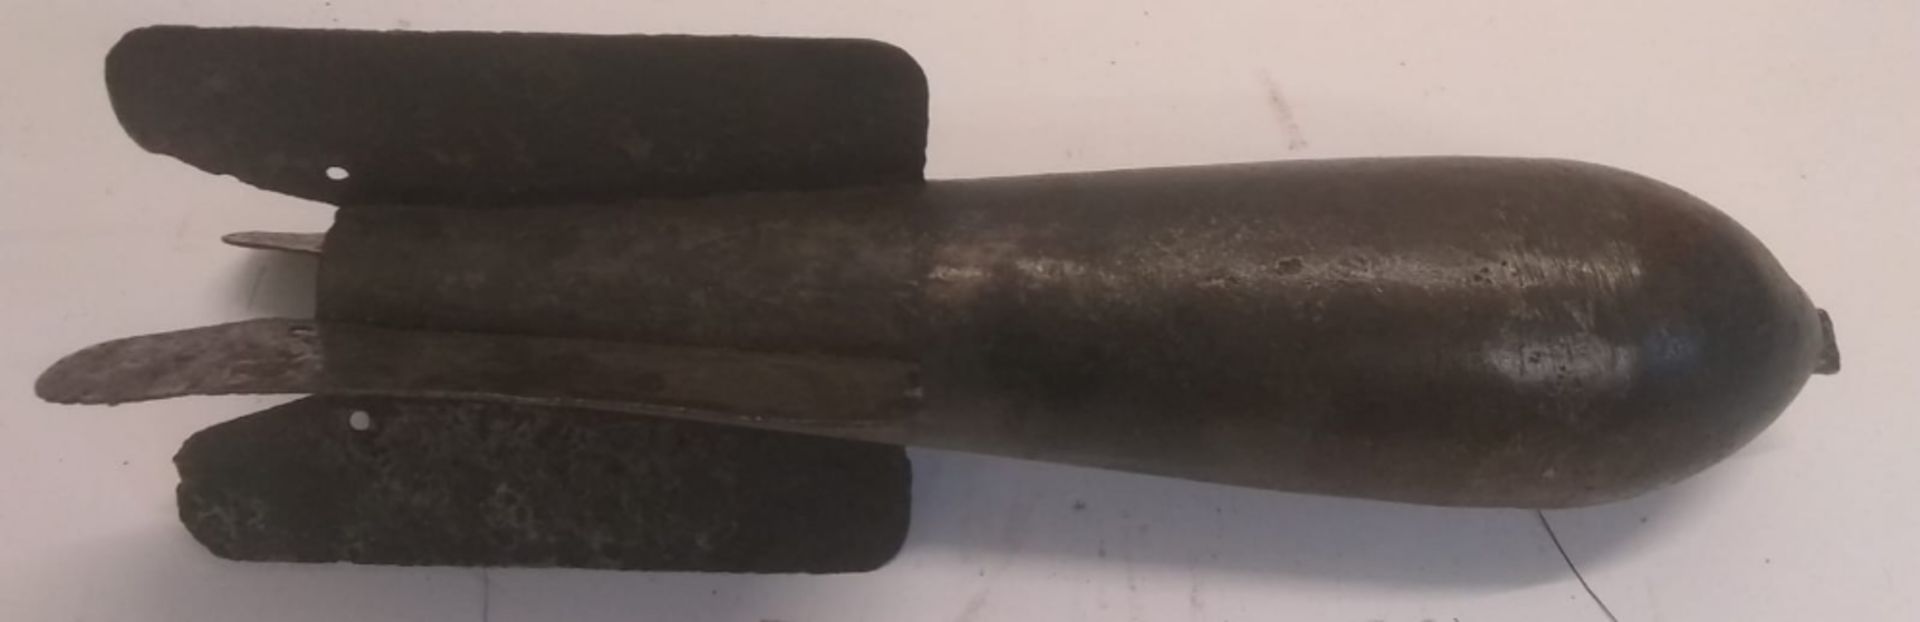 An inert WWI French pneumatic mortar she